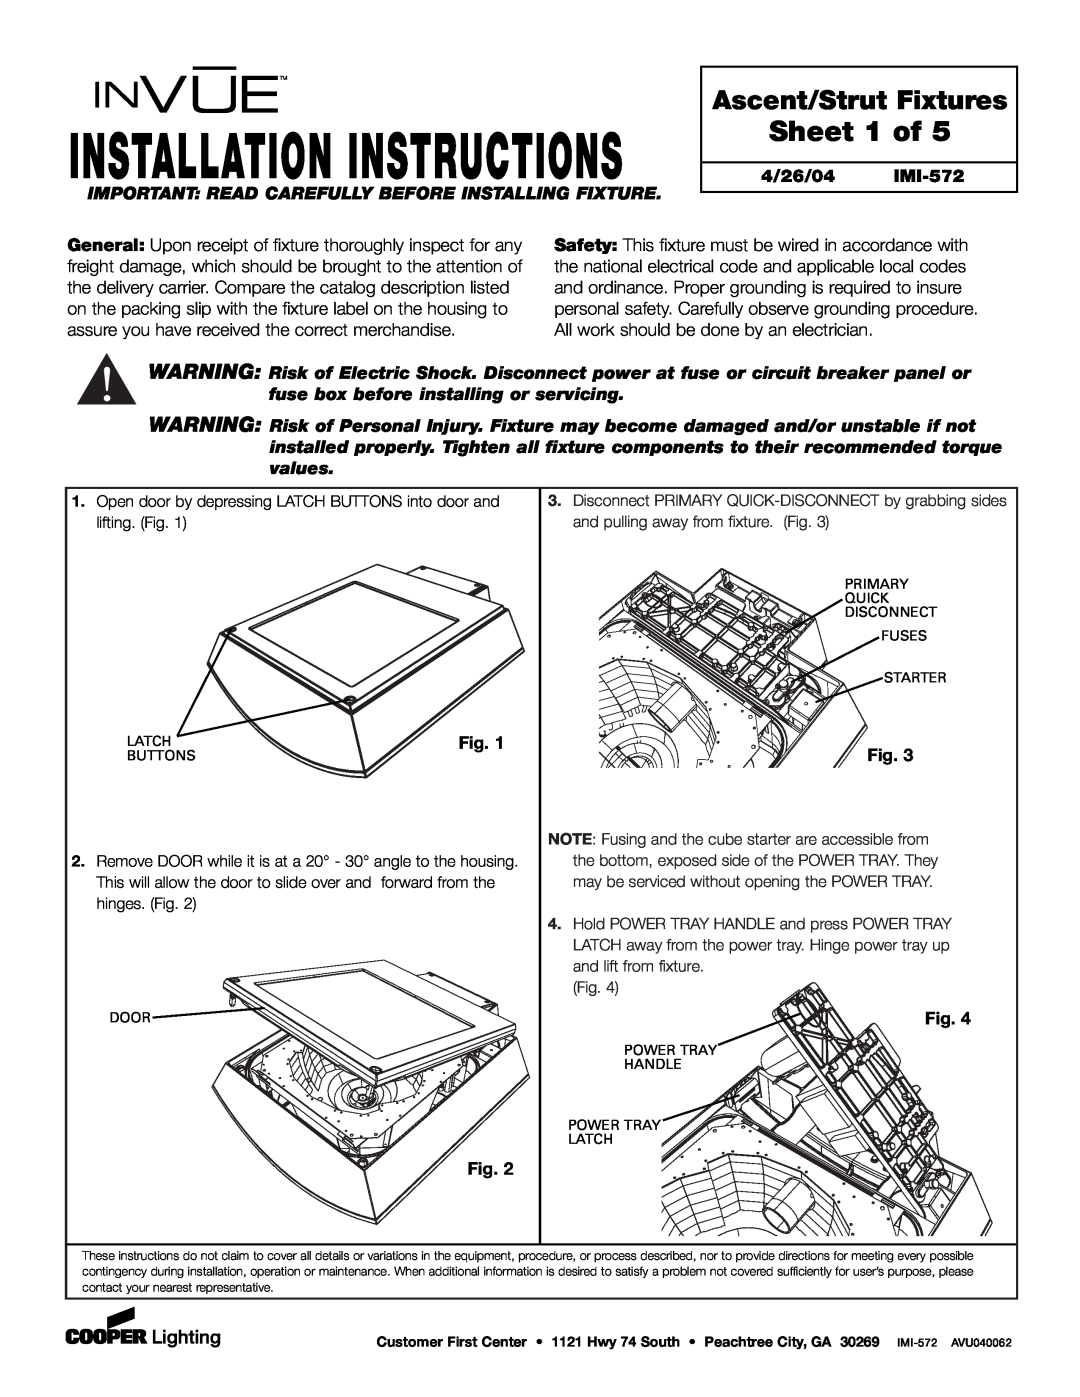 Cooper Lighting IMI-572 installation instructions Installation Instructions, Sheet 1 of, Ascent/Strut Fixtures 